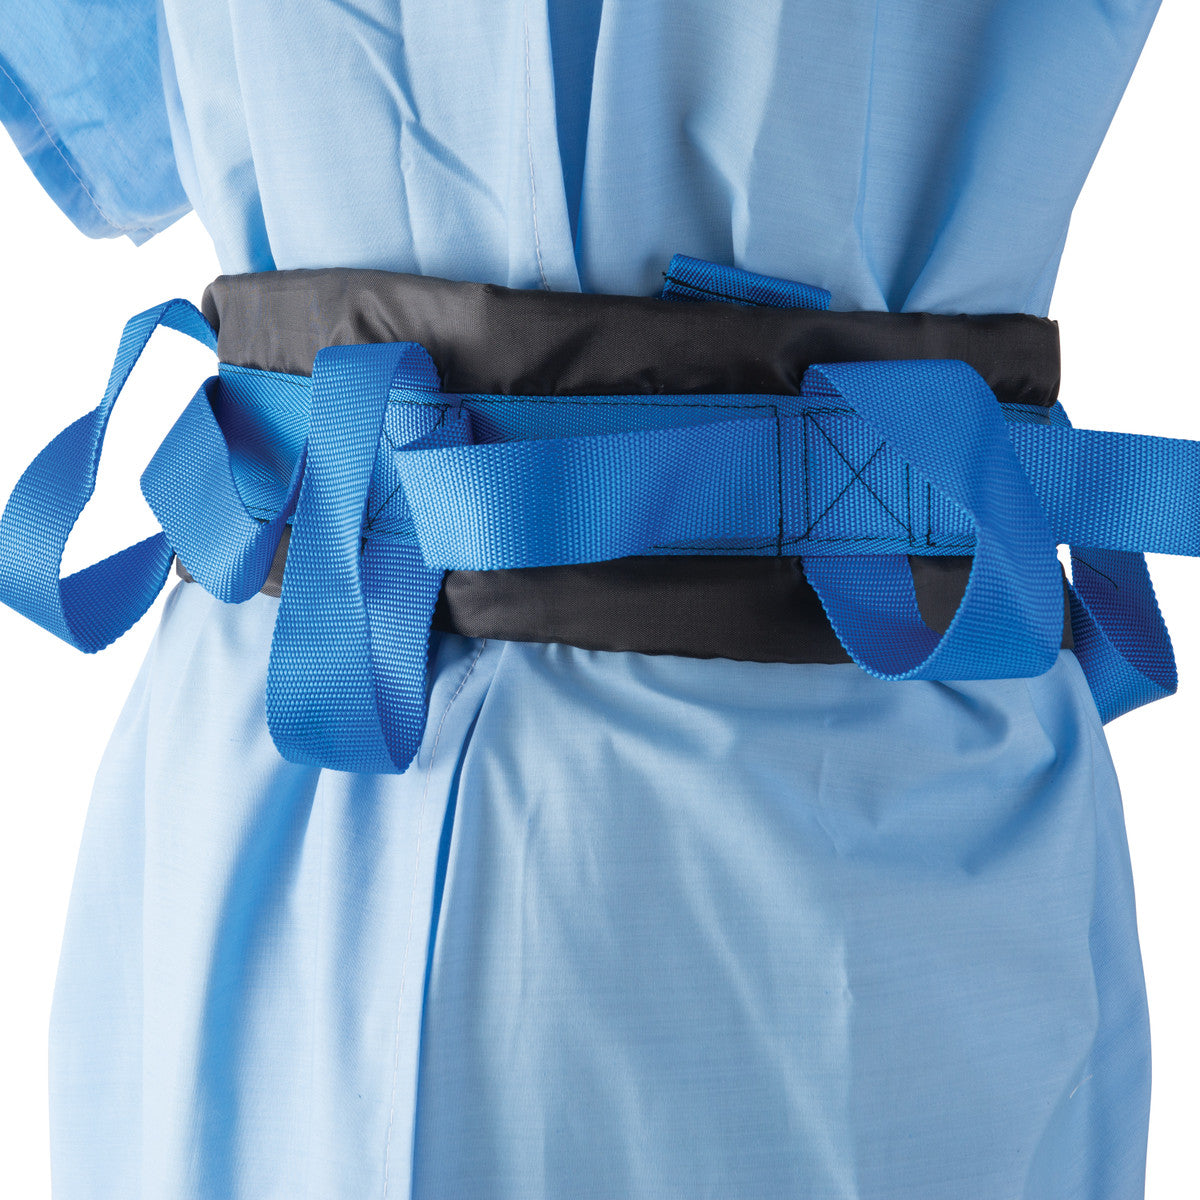 Gait Belts - Patient Safety Transfer Devices